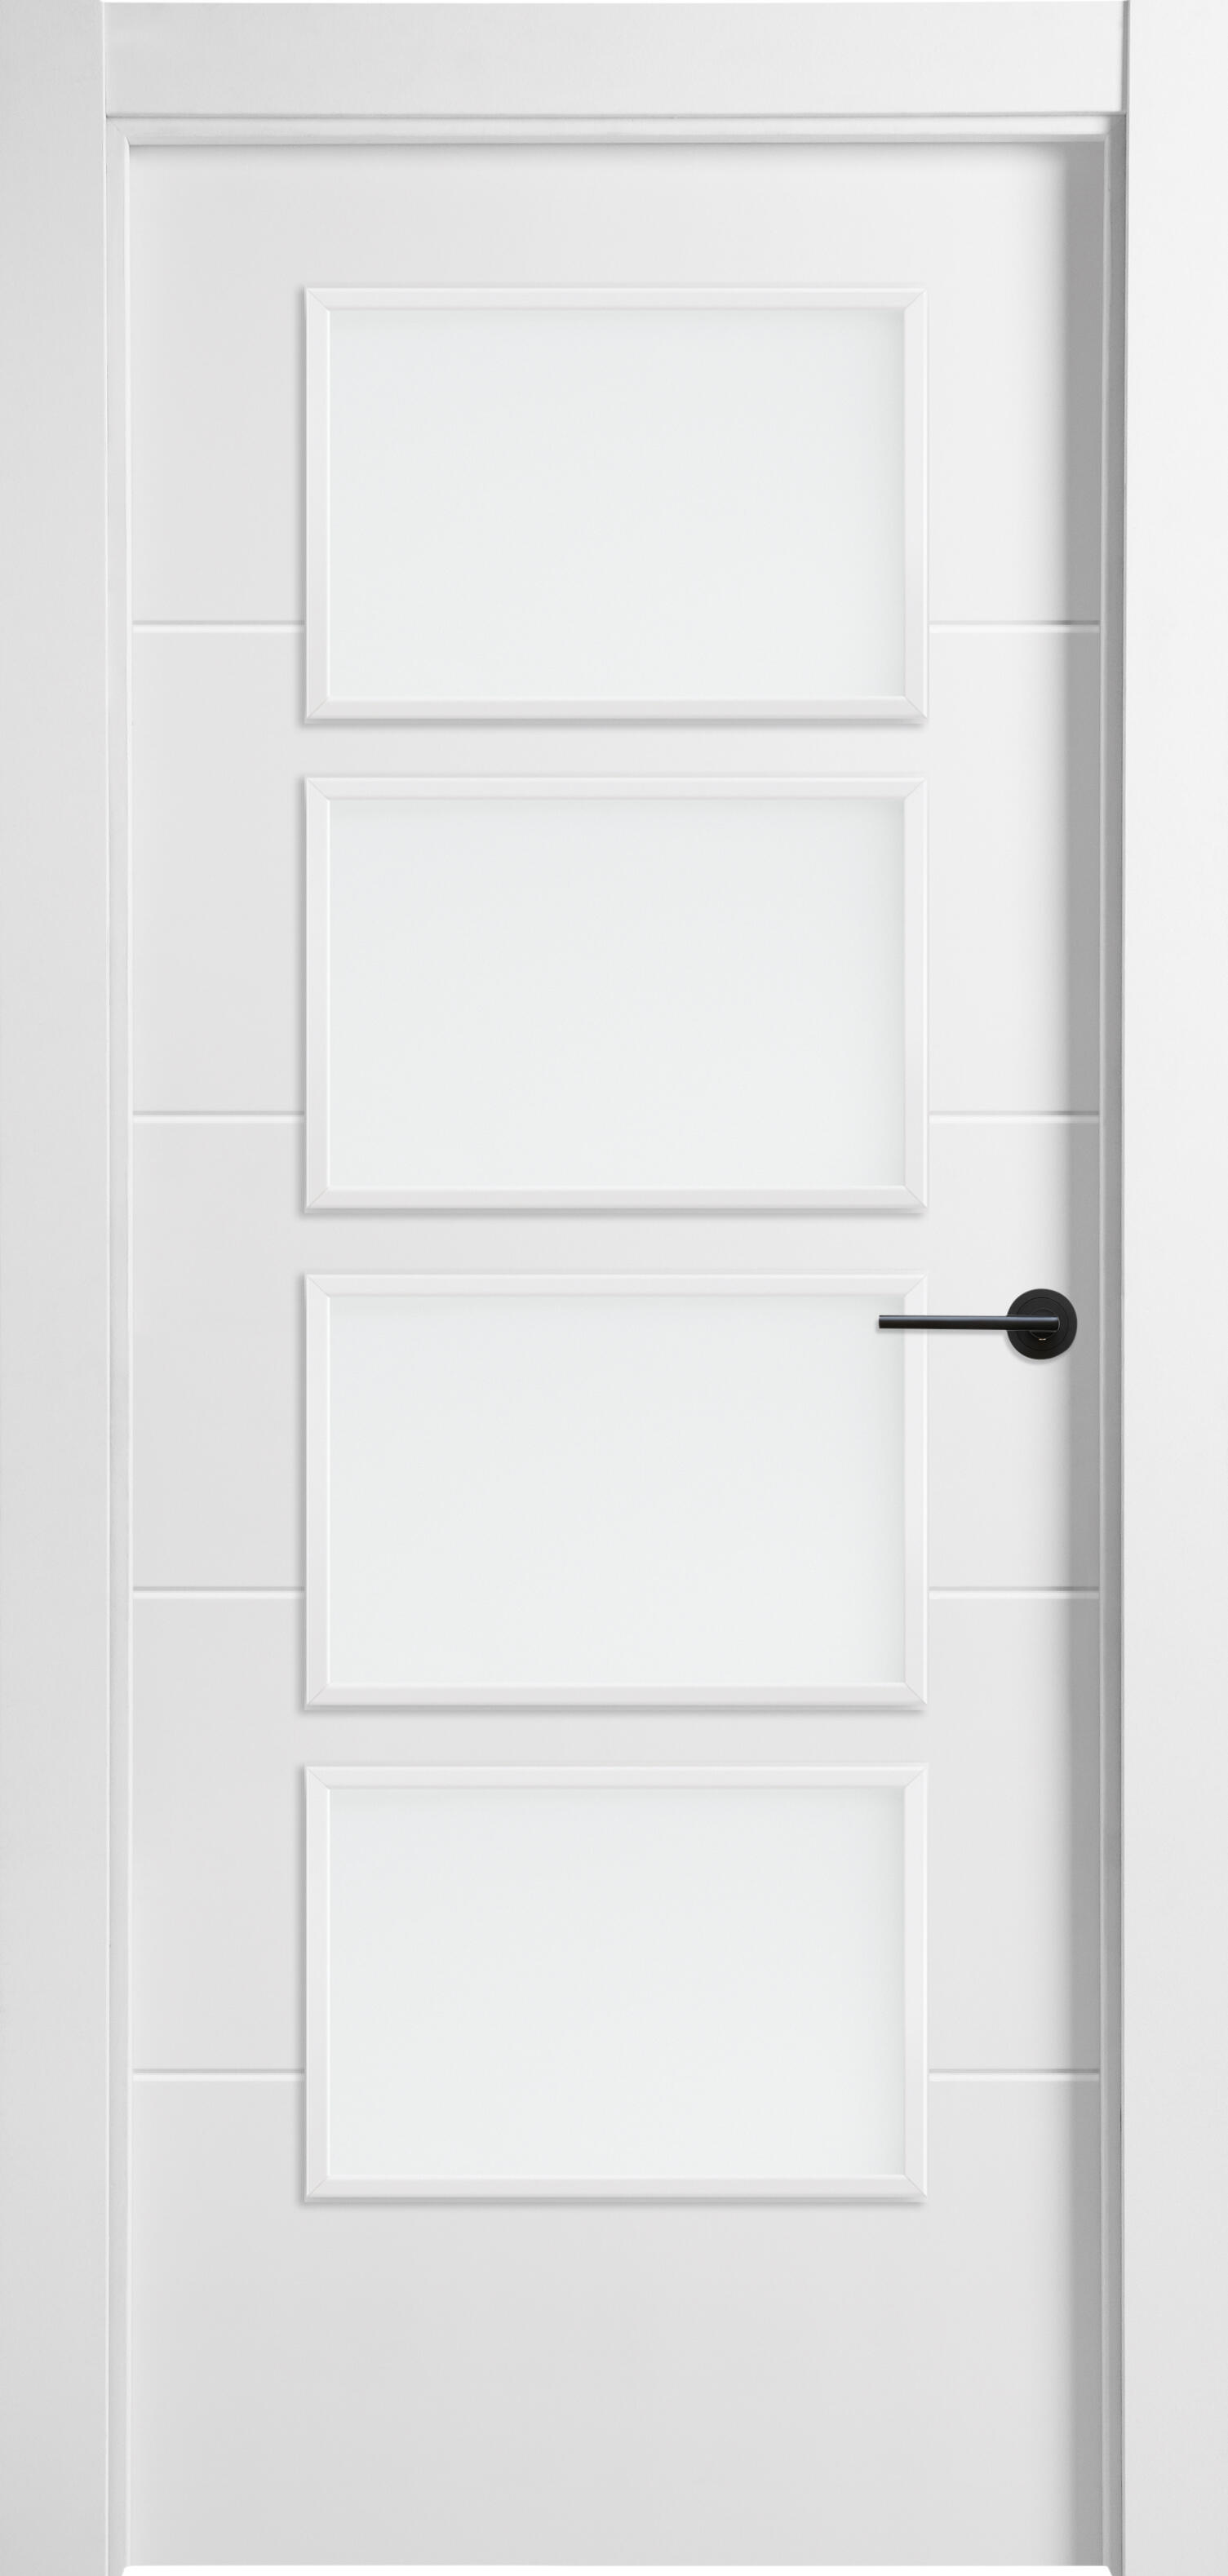 Puerta lucerna plus black blanco de apertura izquierdacon cristal de 11x82.5 cm